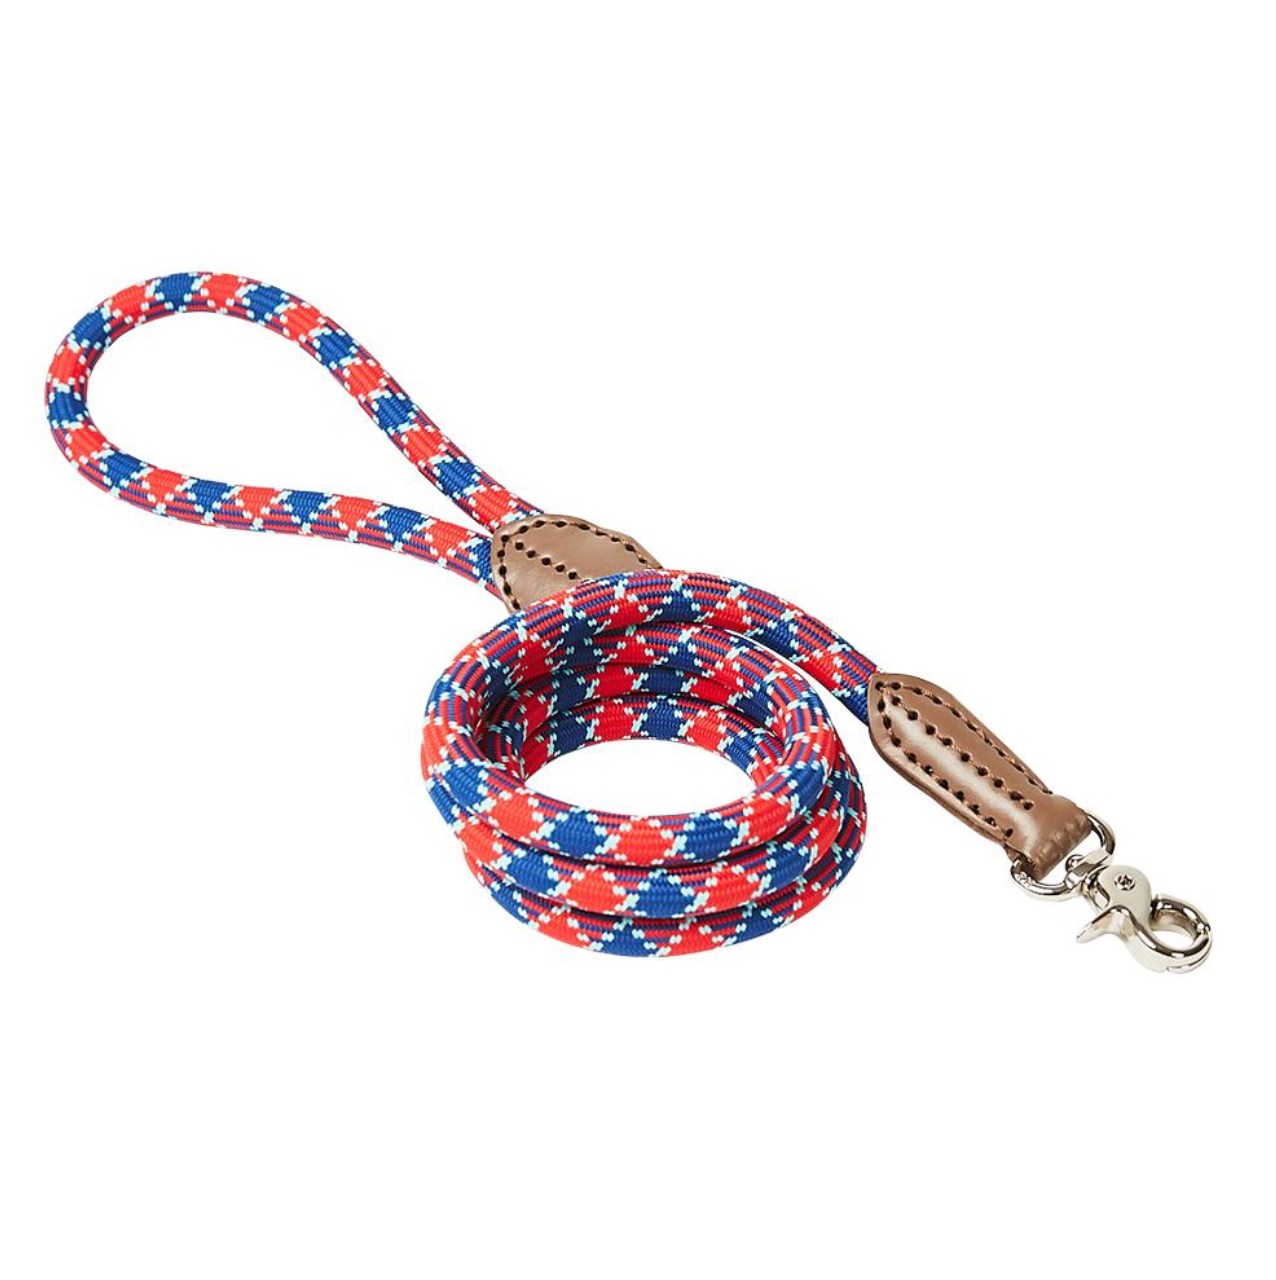 Plaid Rope Dog Leash